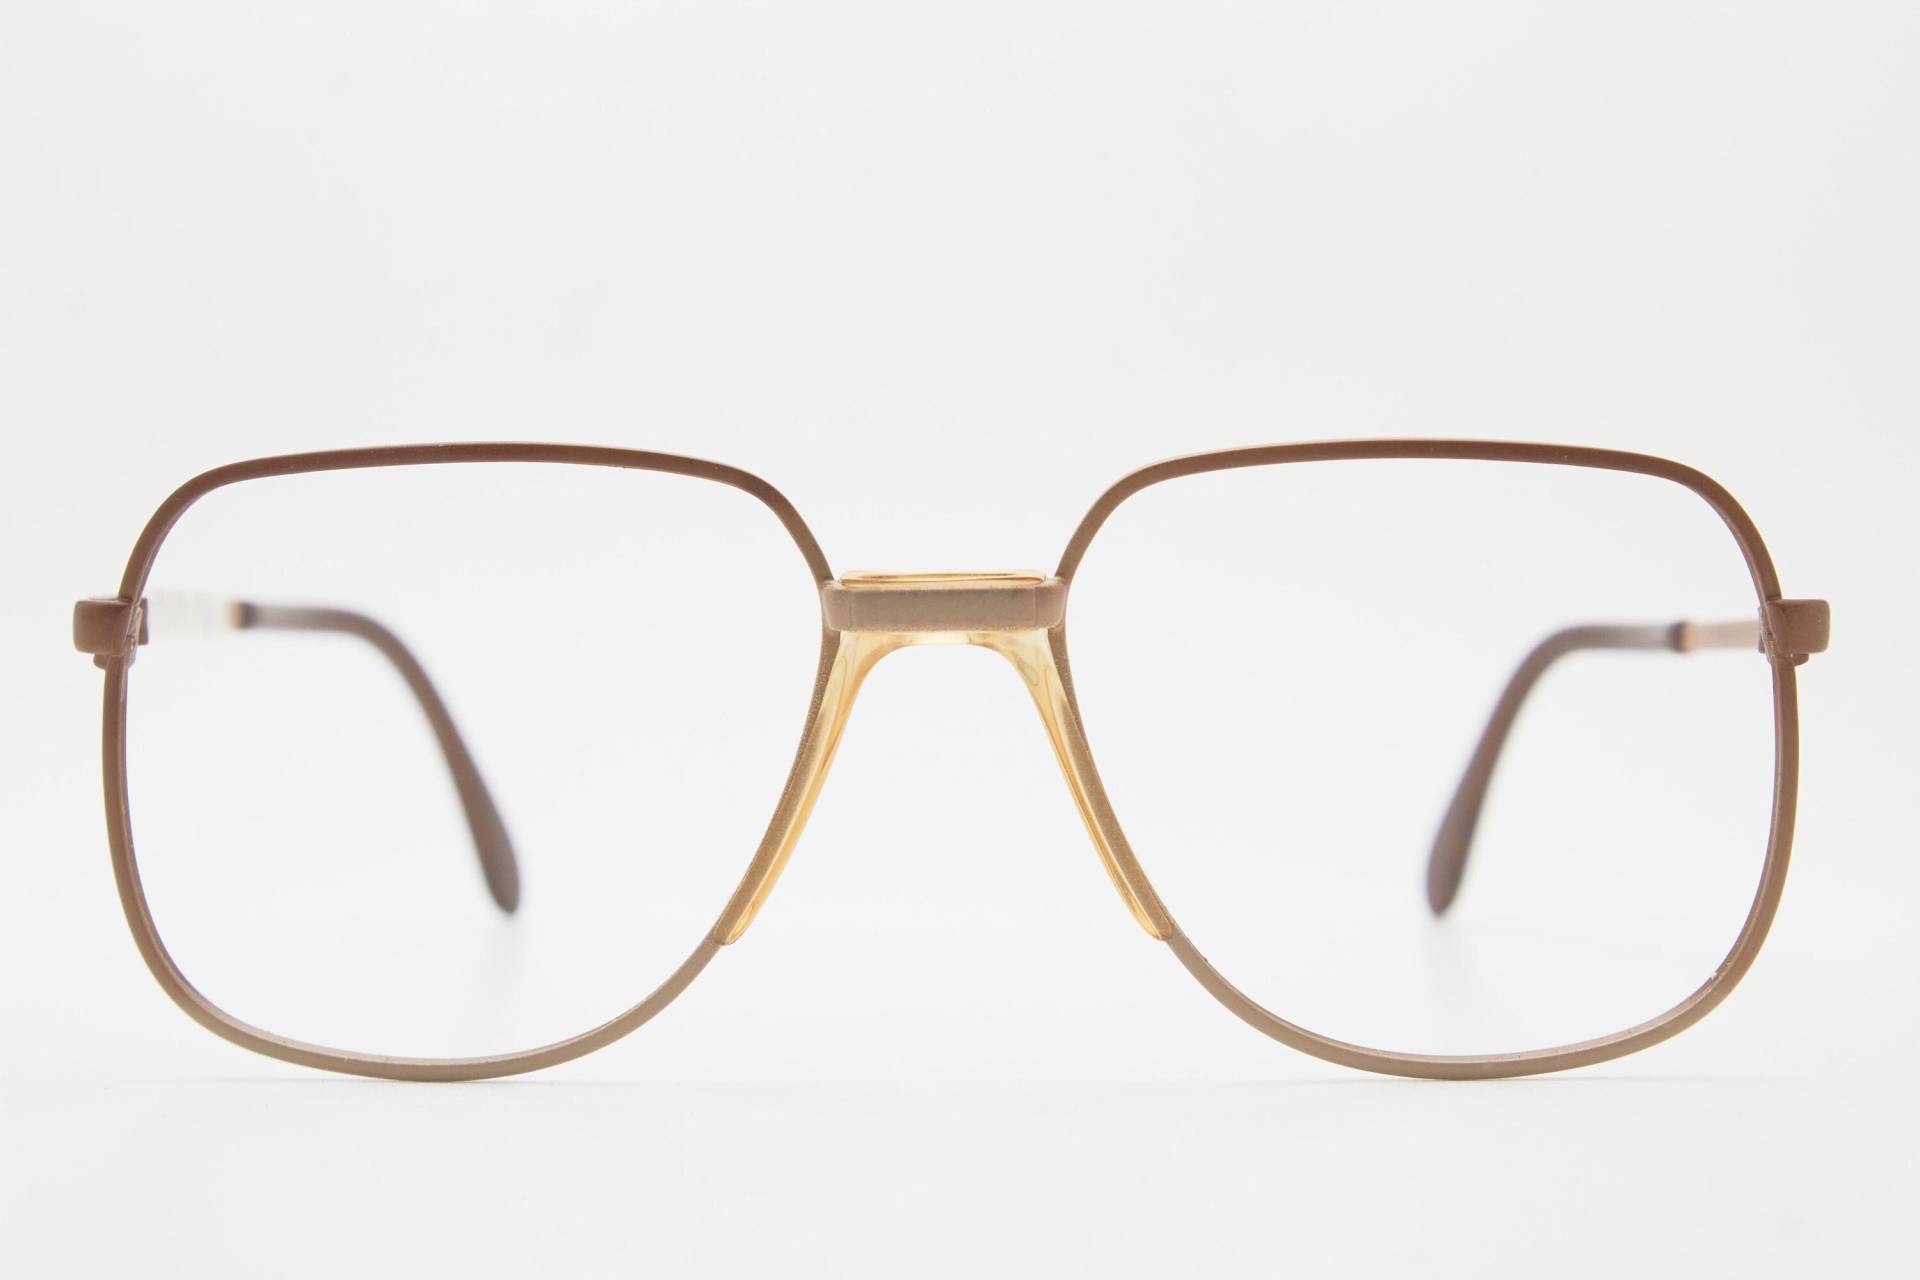 Rodenstock Brille Hedrik 2747 M. Braune Brille, Vintage 1980Er Jahre, Fliegerbrille, Oversize Sonnenbrille, Pilotenbrille, 80Er von VintageGlassesVault